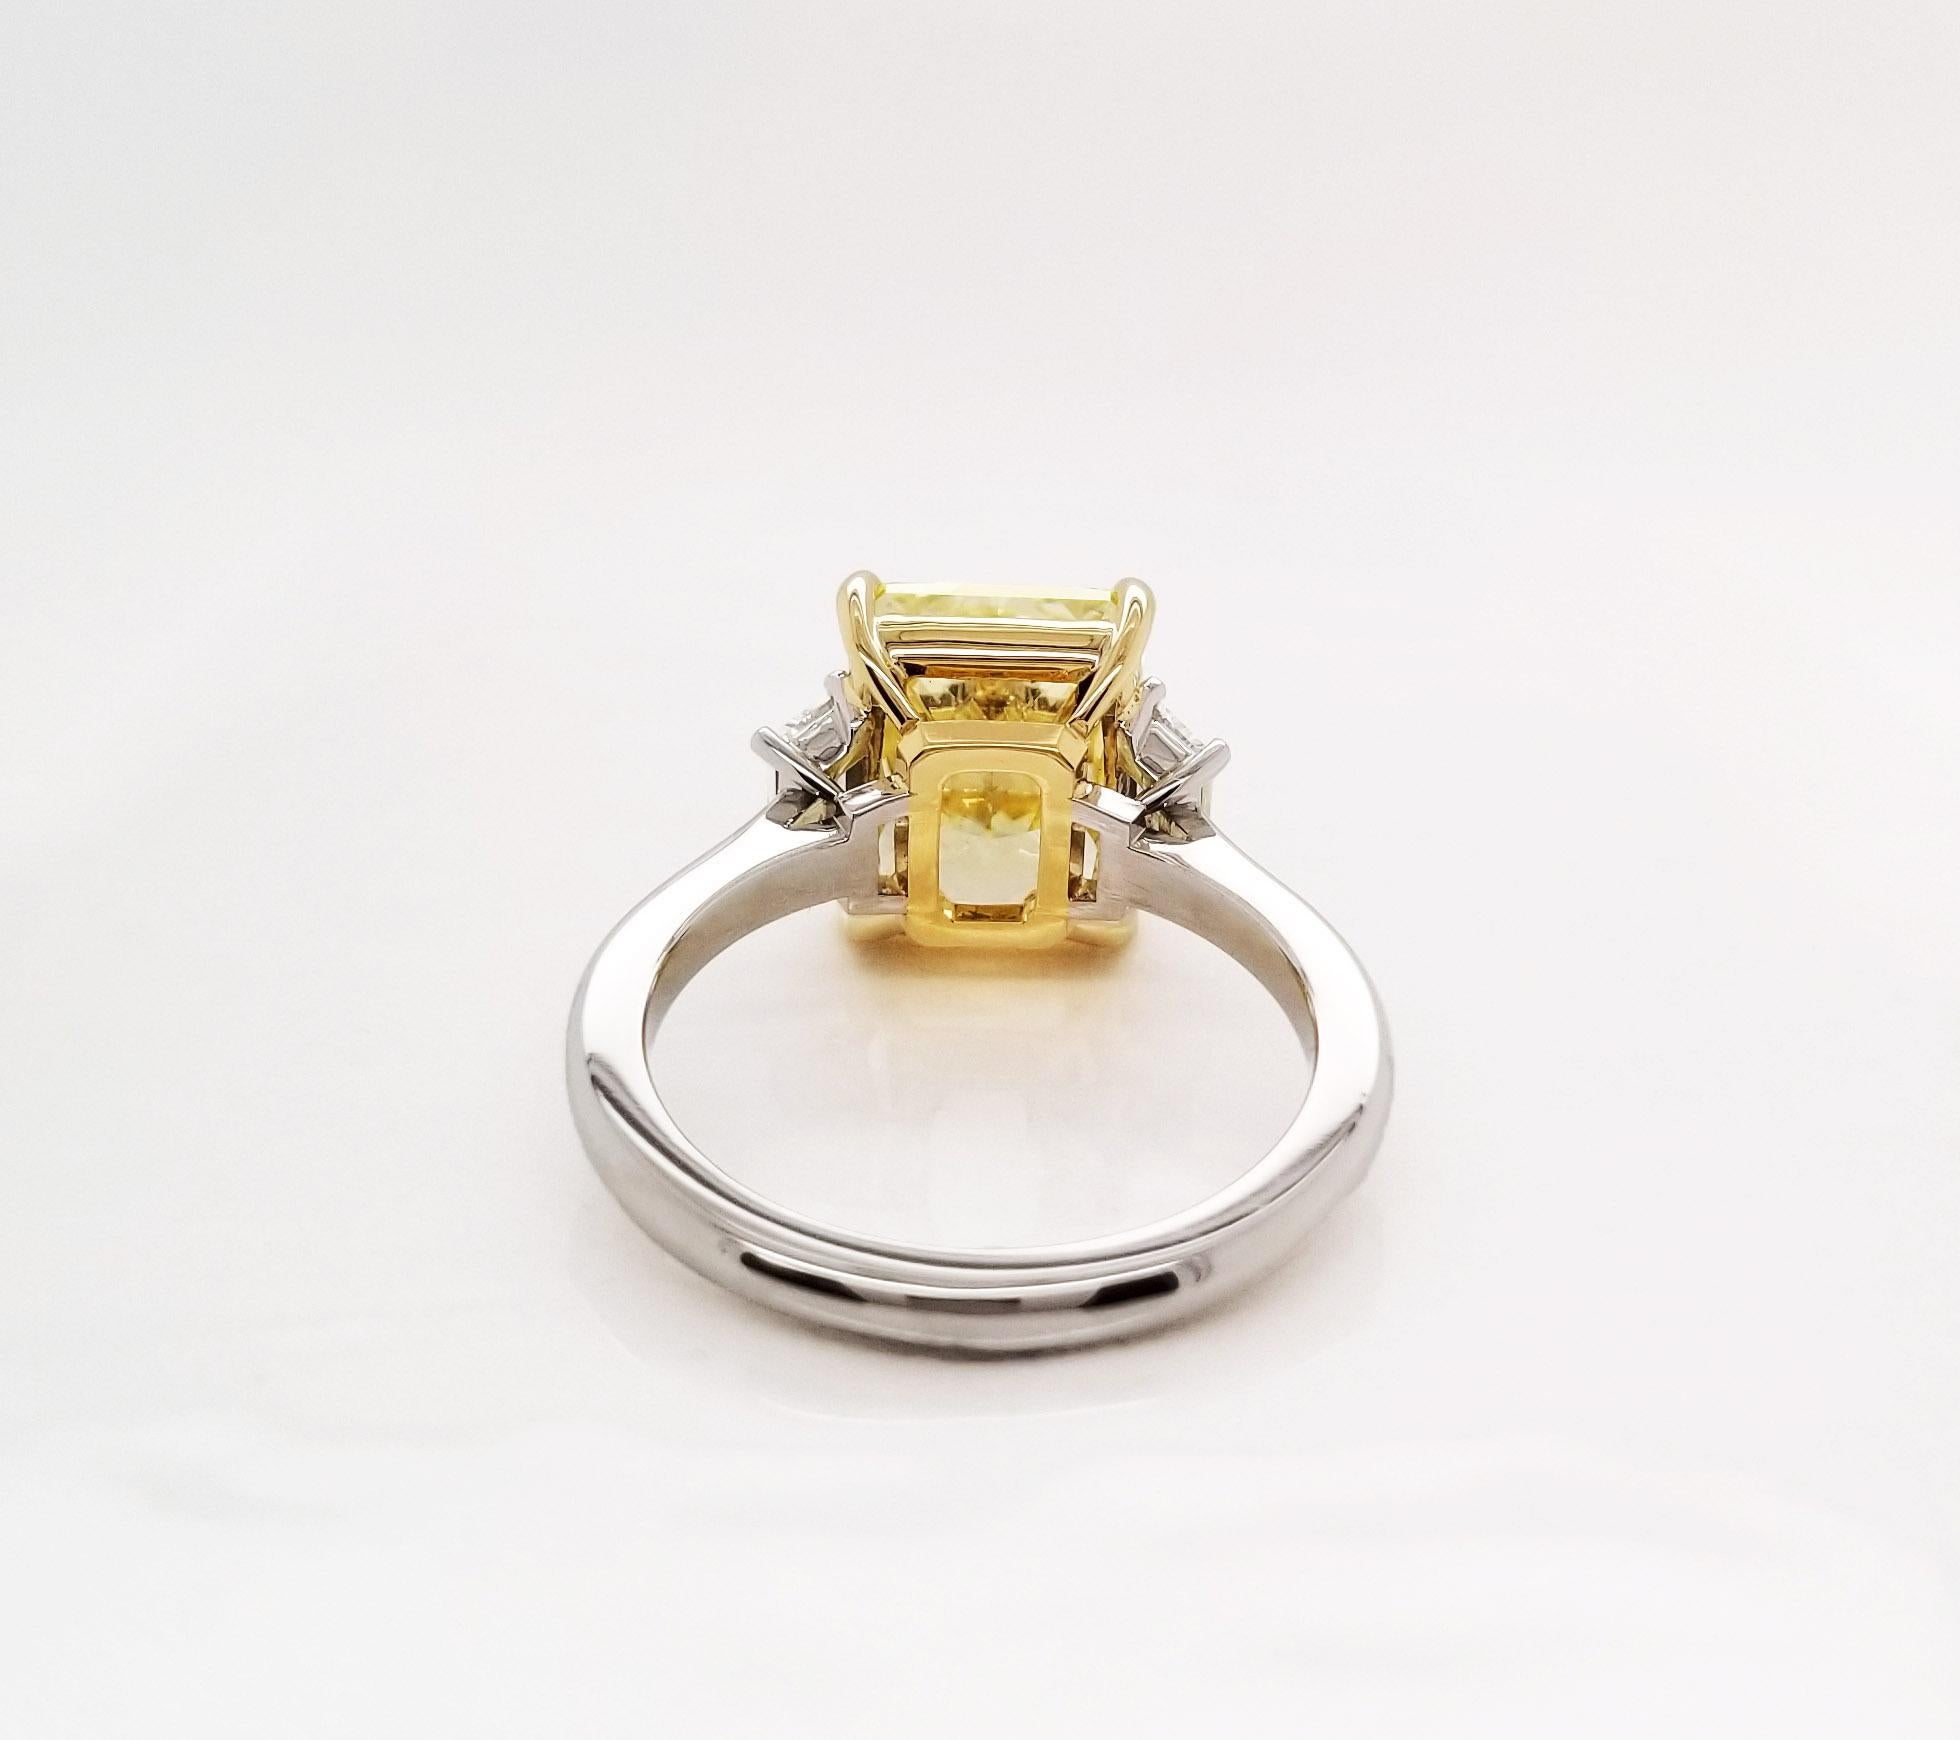 yellow engagement ring distributor -china -china -forum -blog -wikipedia -.cn -.gov -alibaba